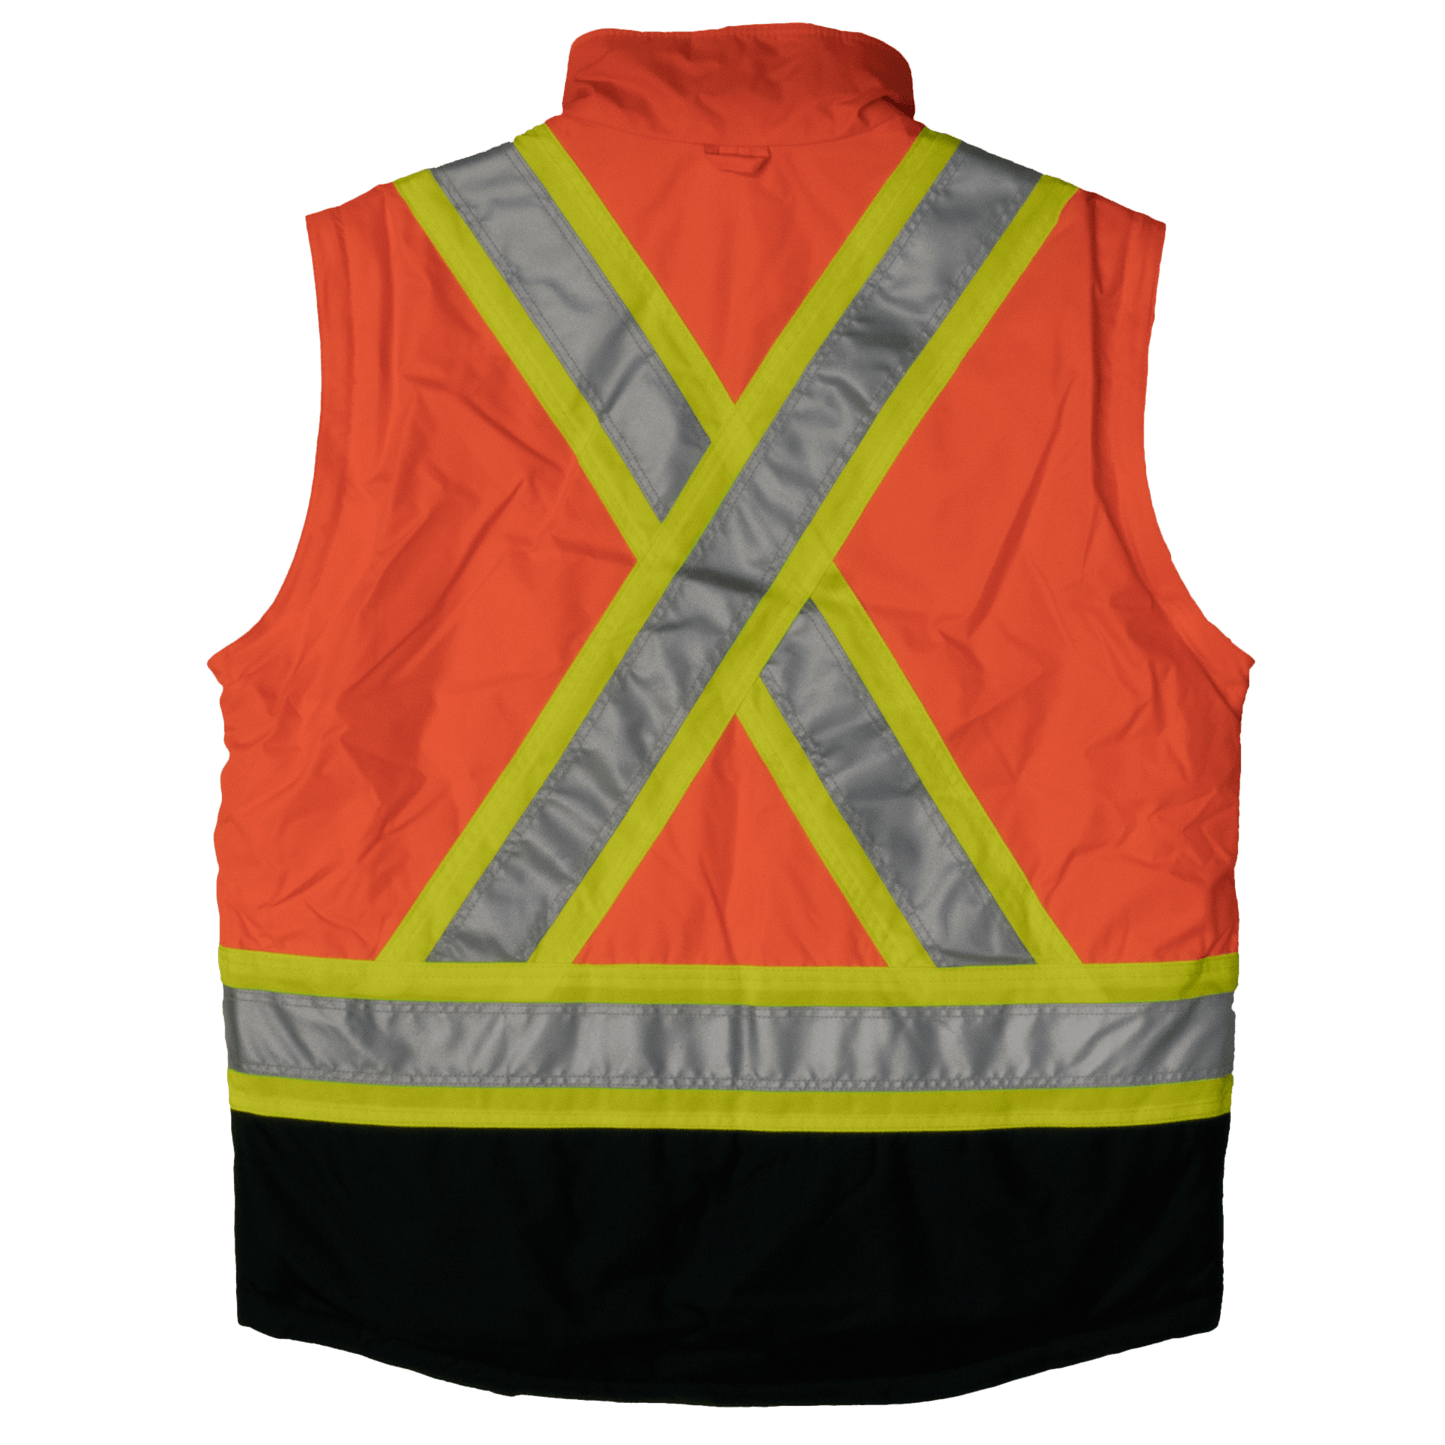 Tough Duck 5-in-1 Safety Jacket - S426 - Fluorescent Orange - vest- back